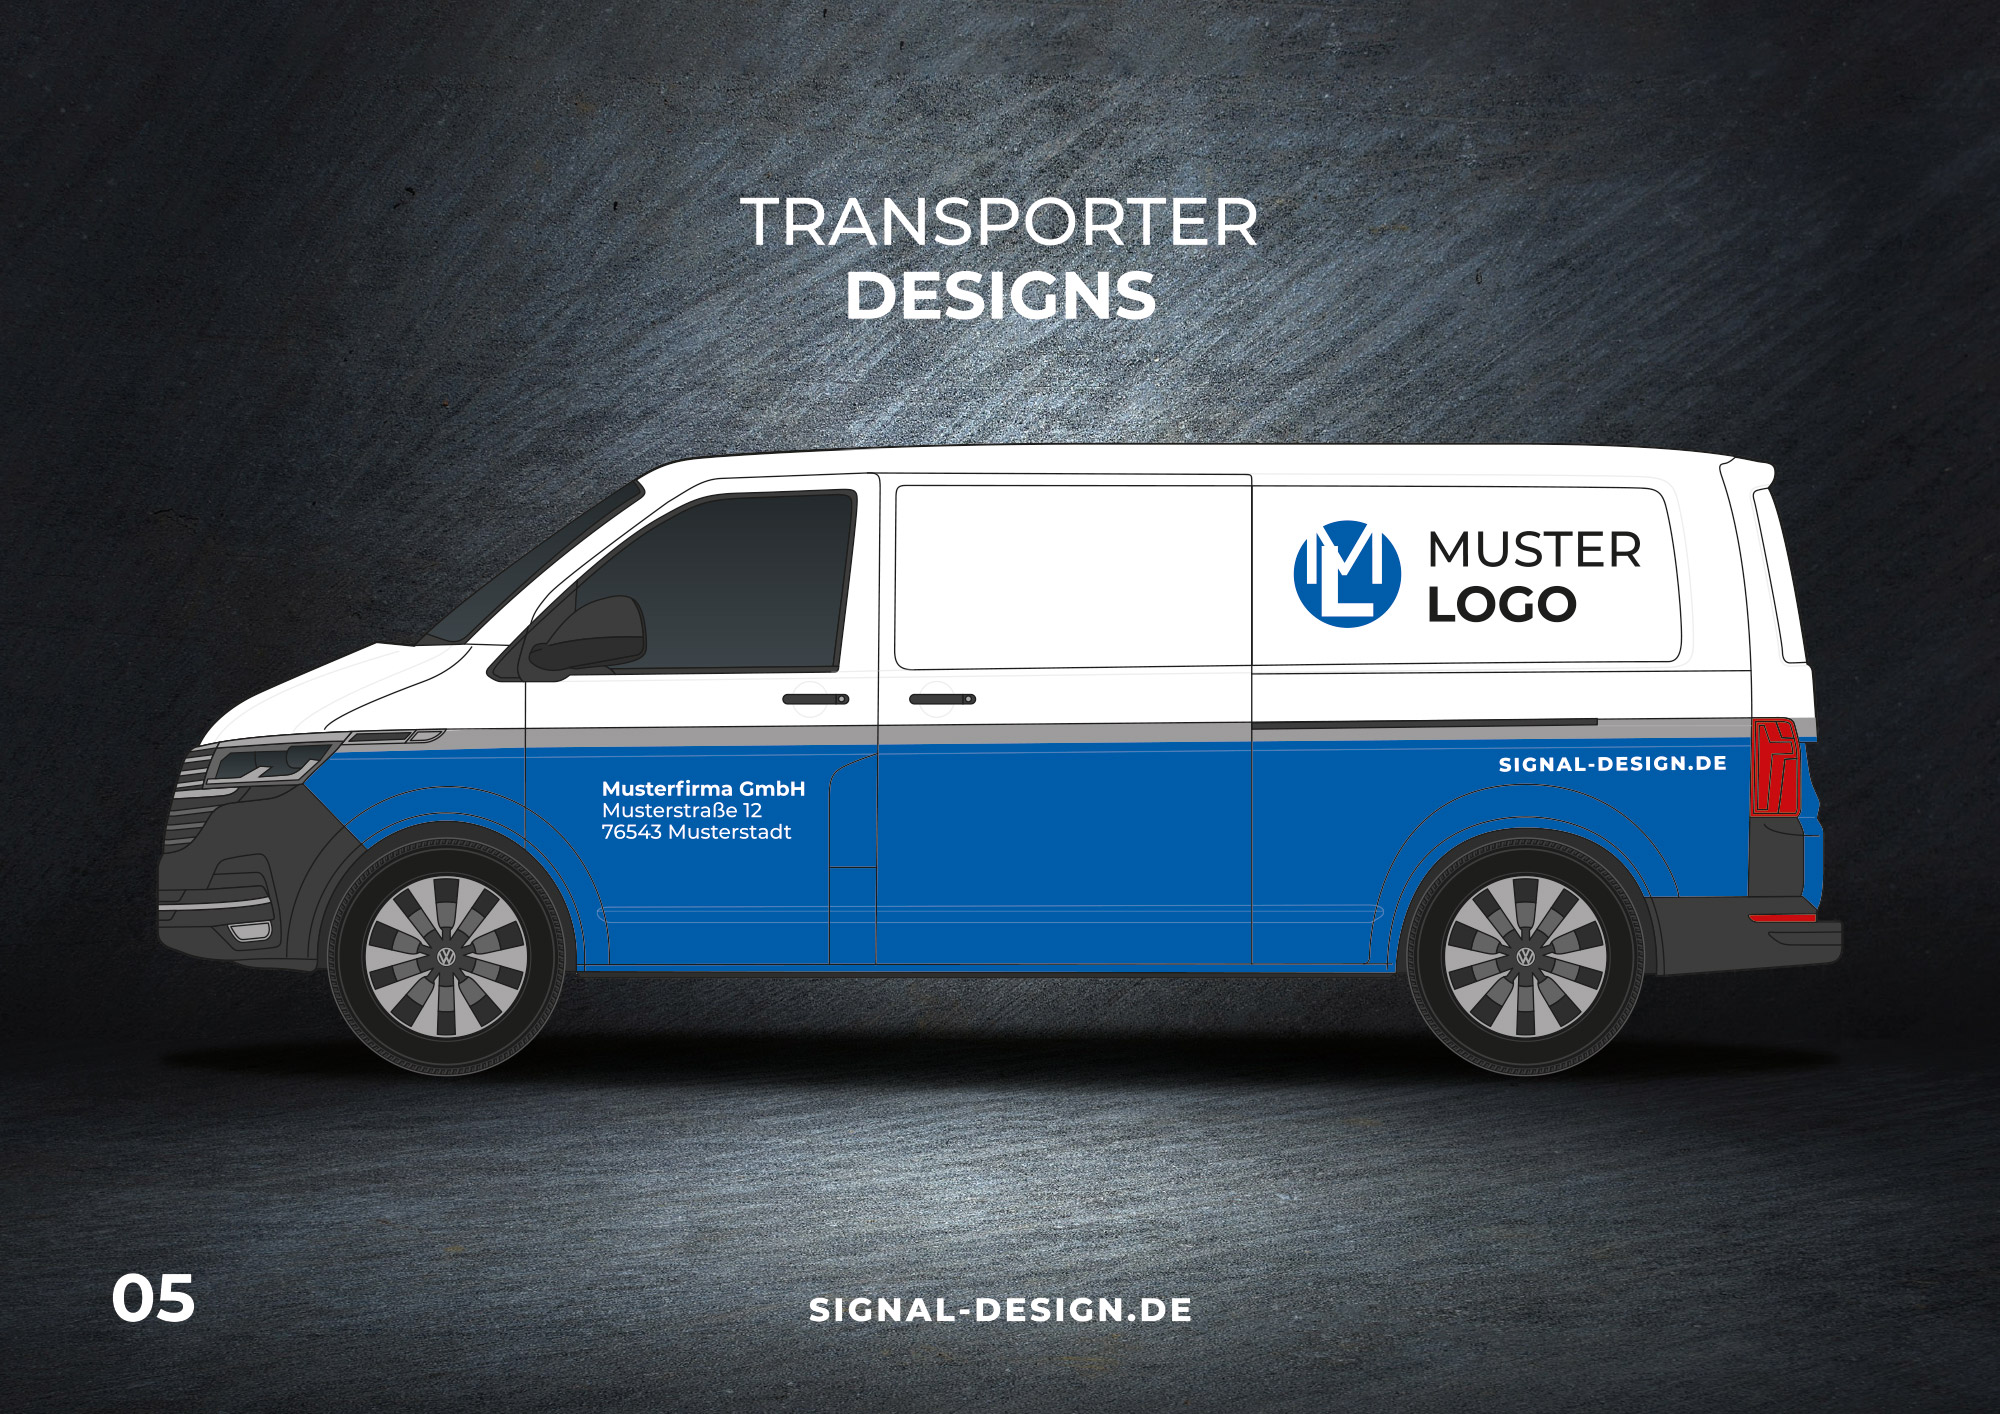 FLO-transporter-designs-1